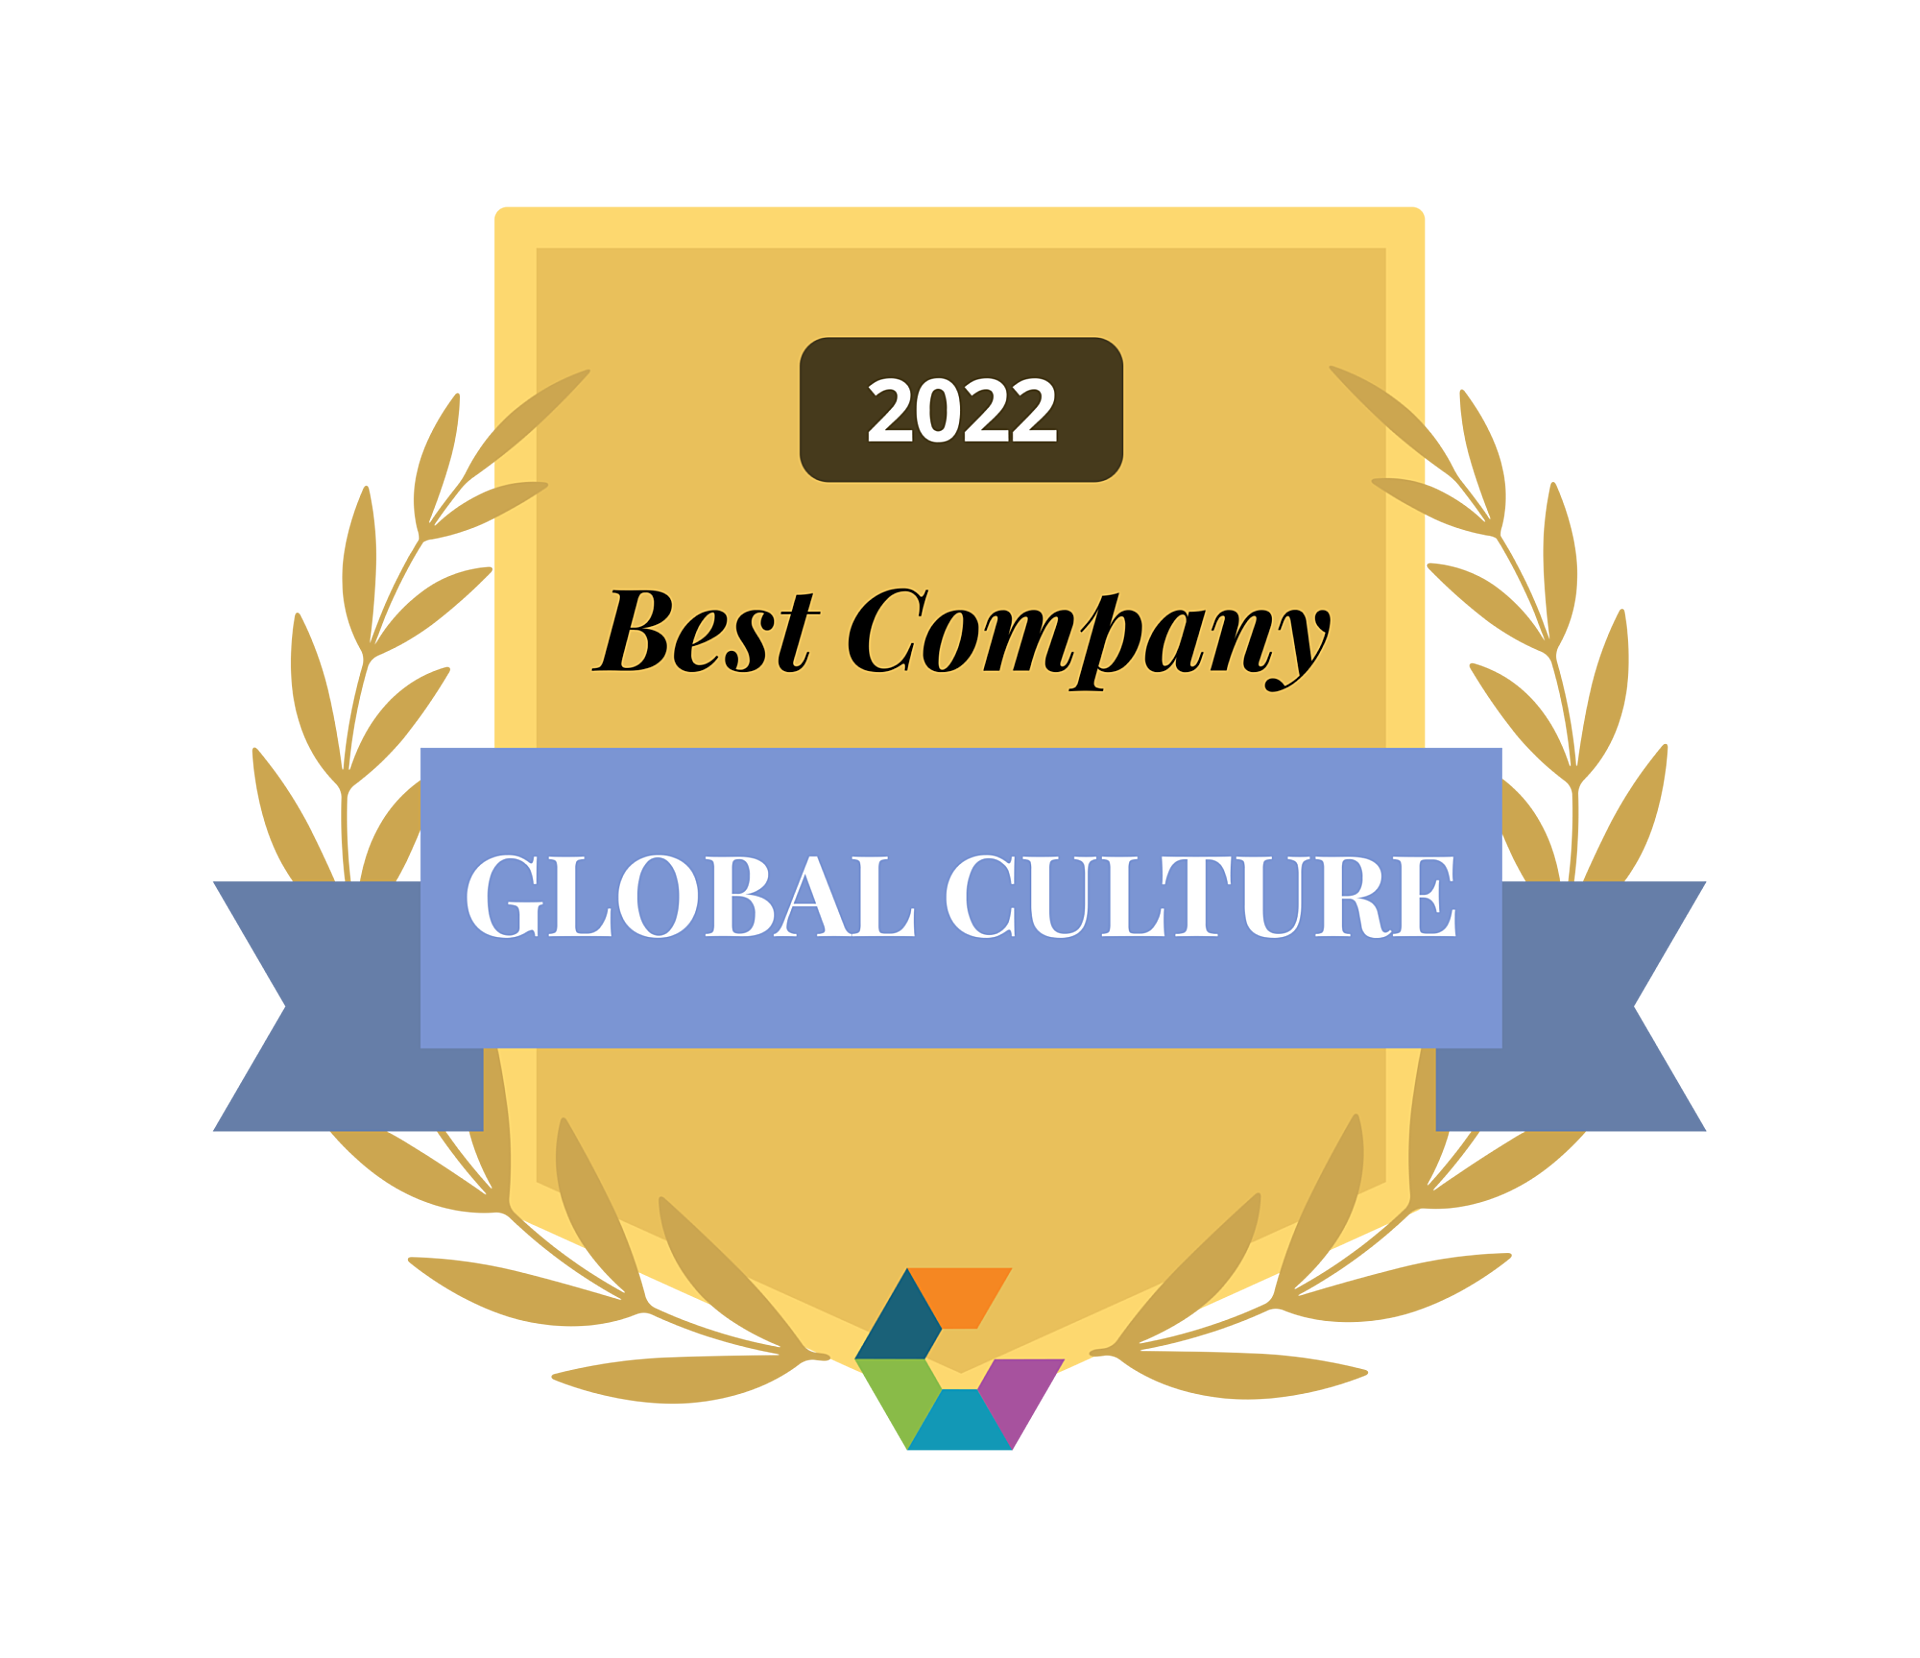 Best company global culture 2022